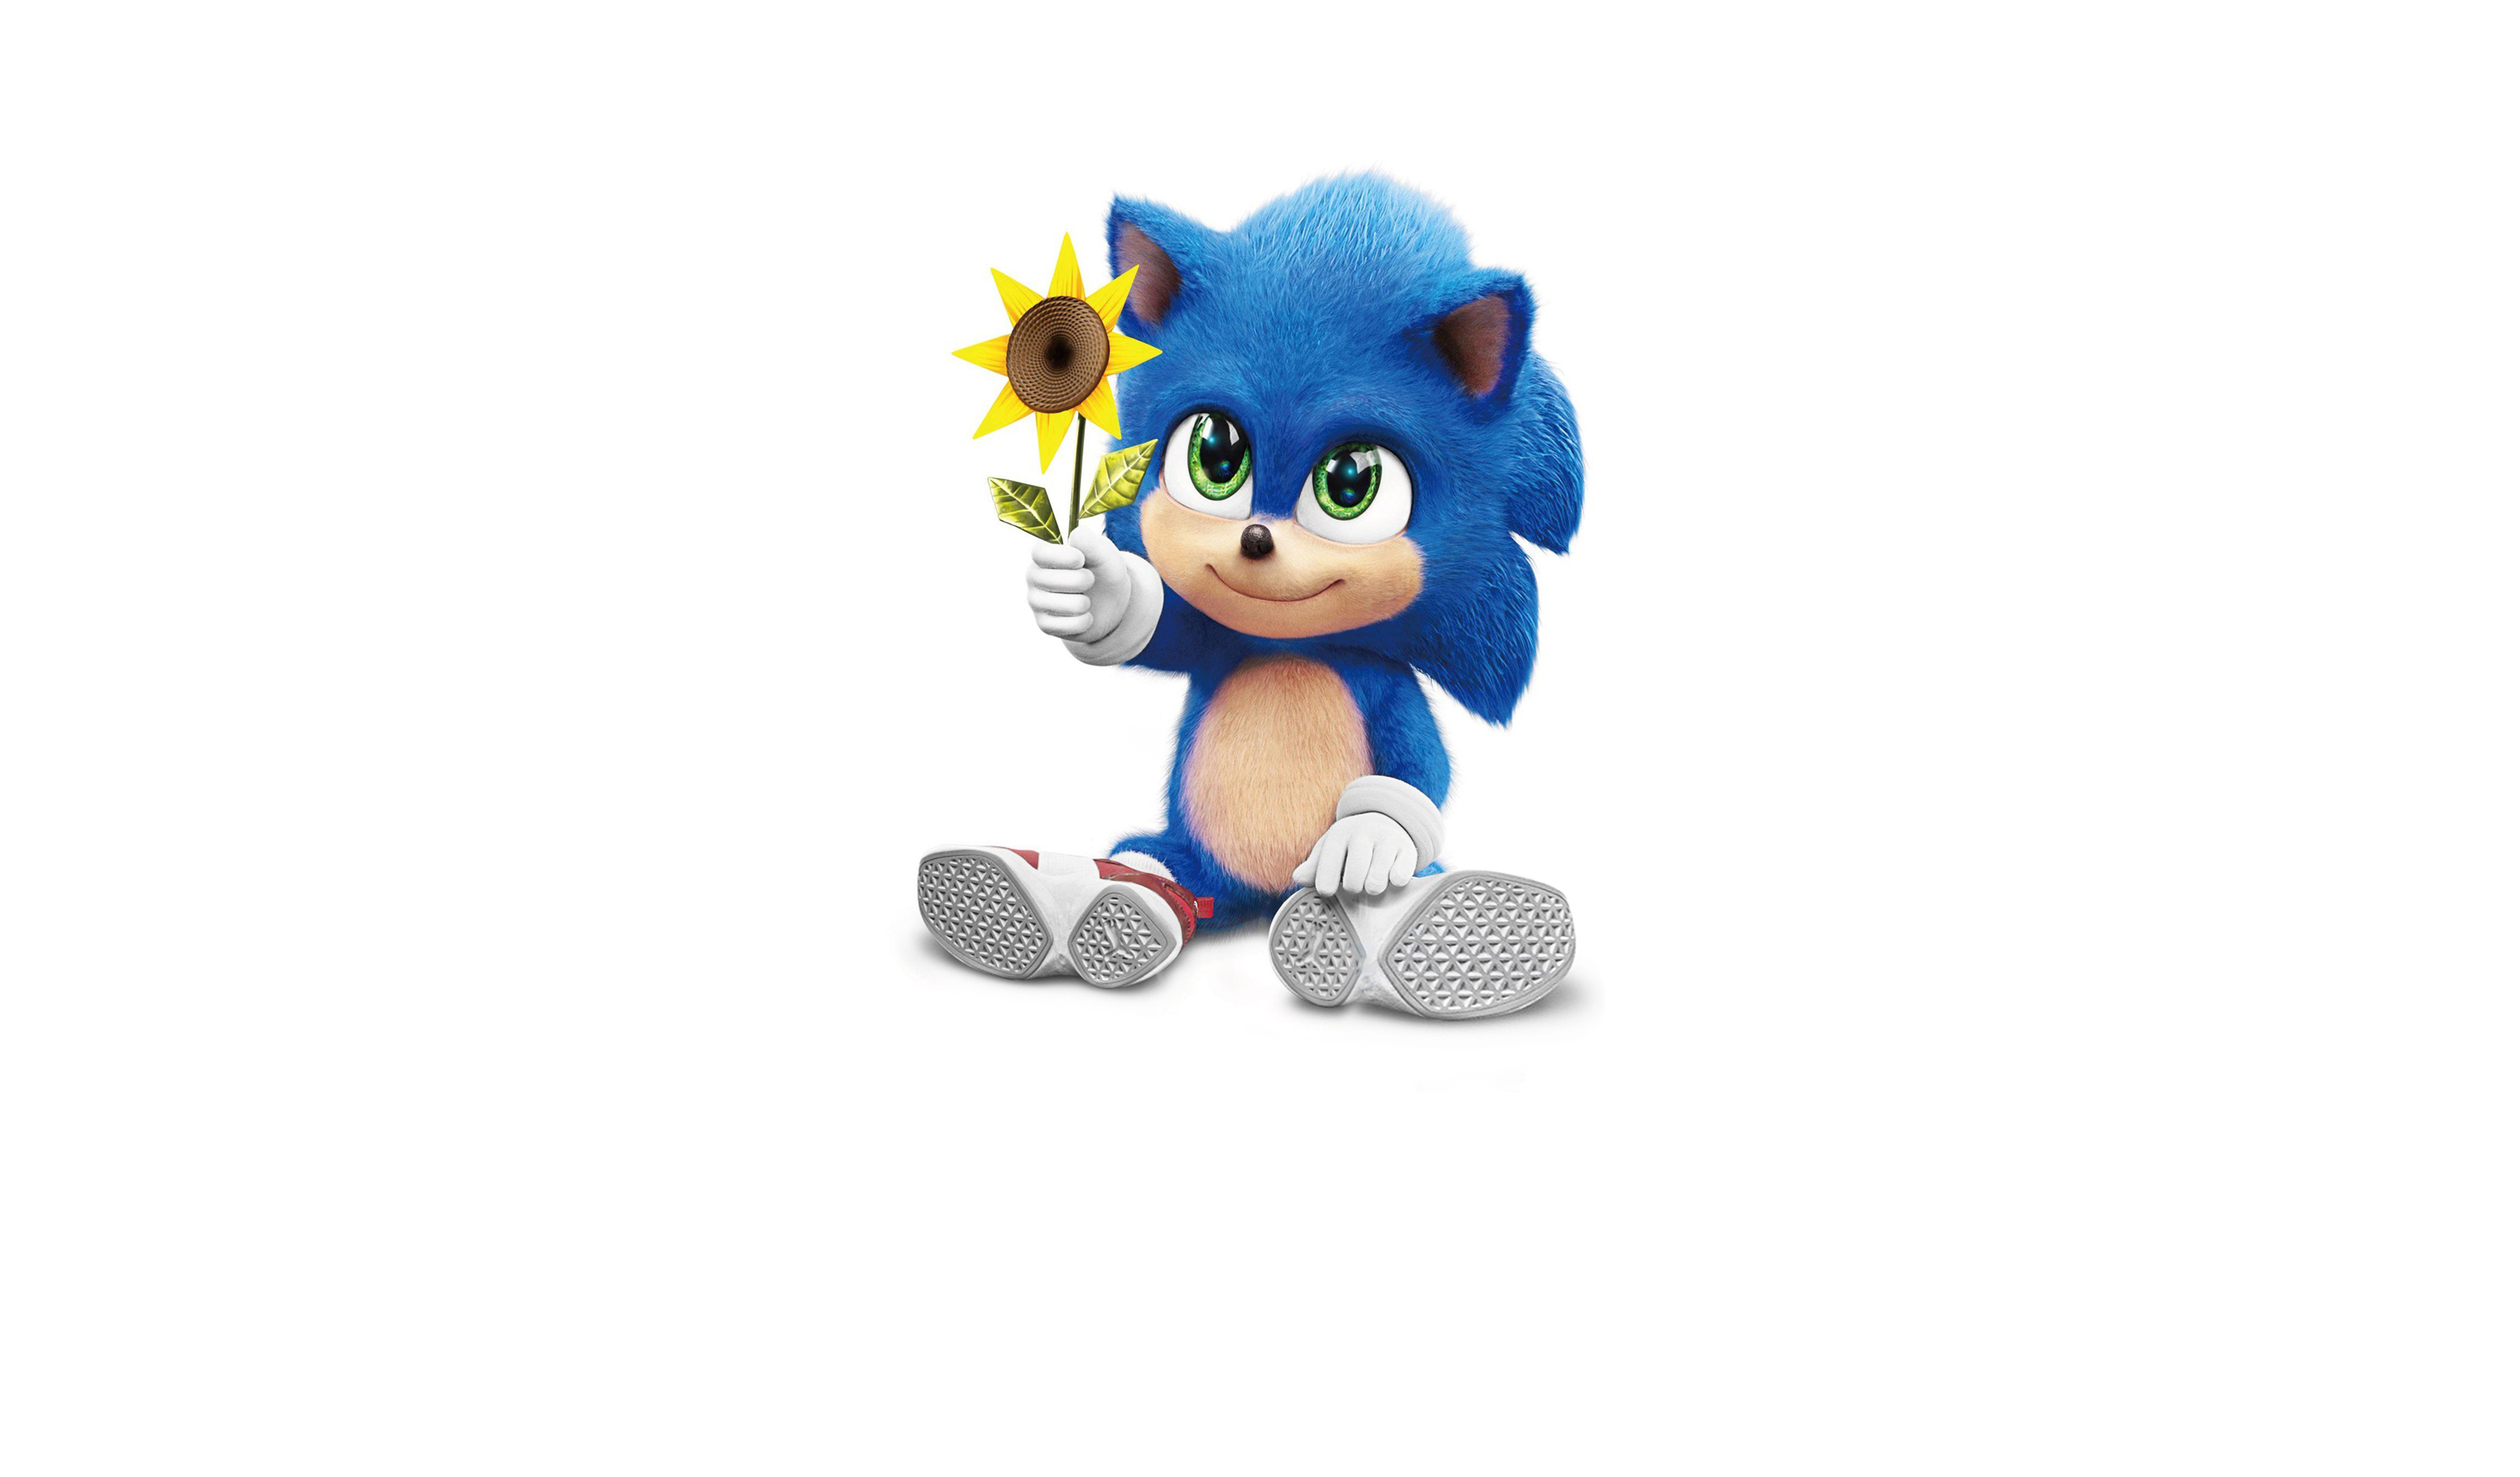 Sonic the Hedgehog 2019 Movie 4K 8K Wallpapers, HD Wallpapers